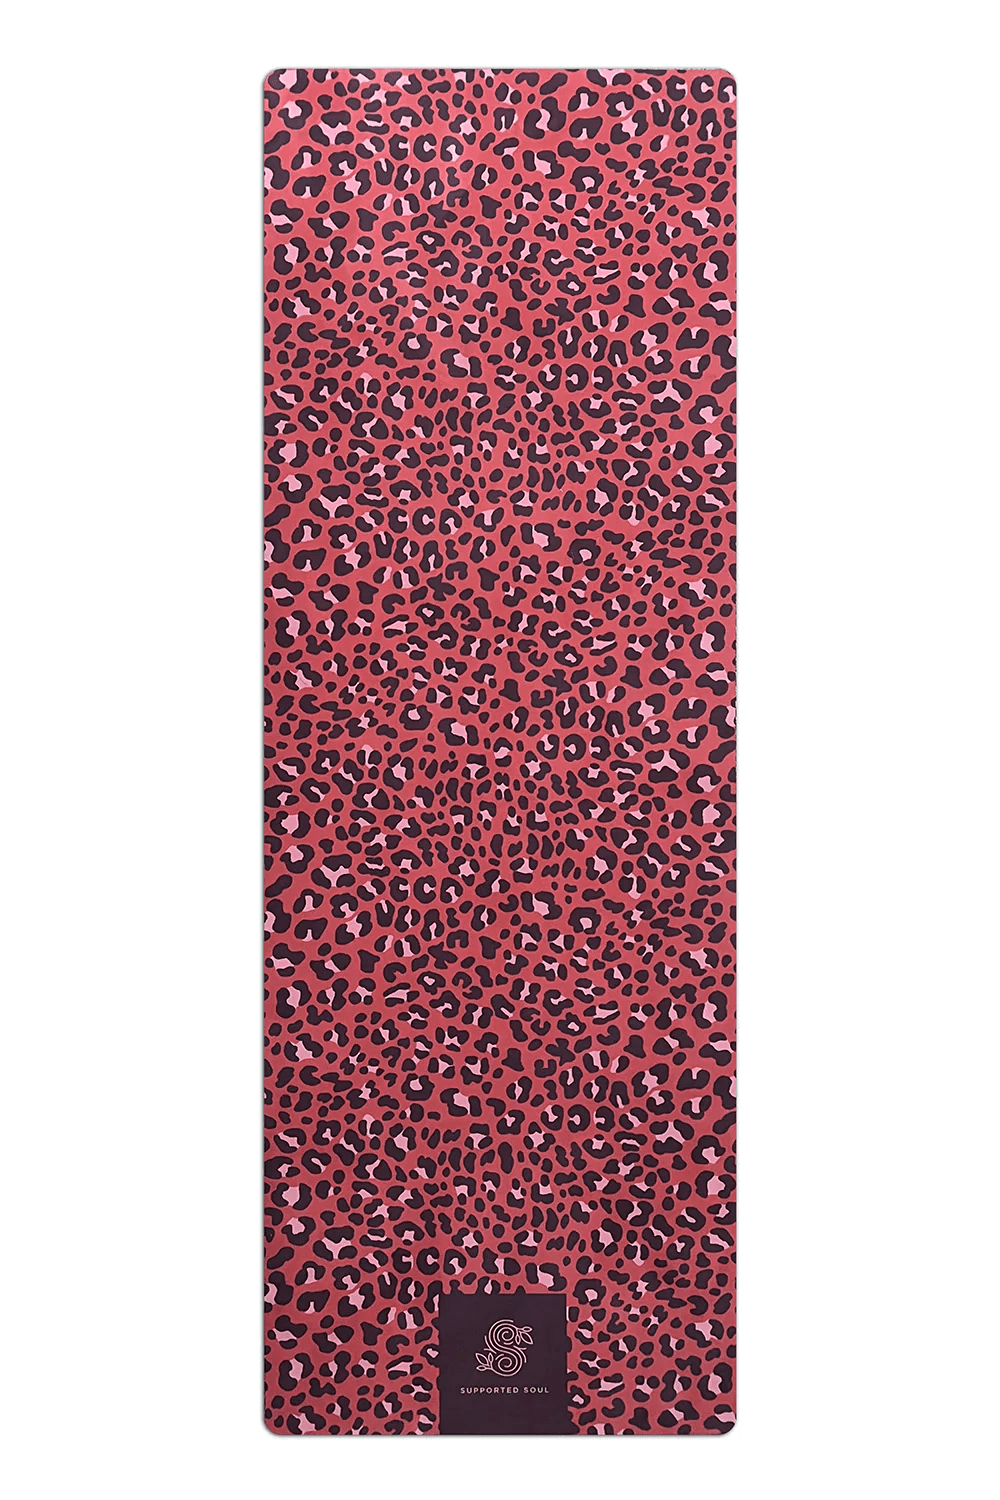 Cheetah - All-in-One Yoga Mat